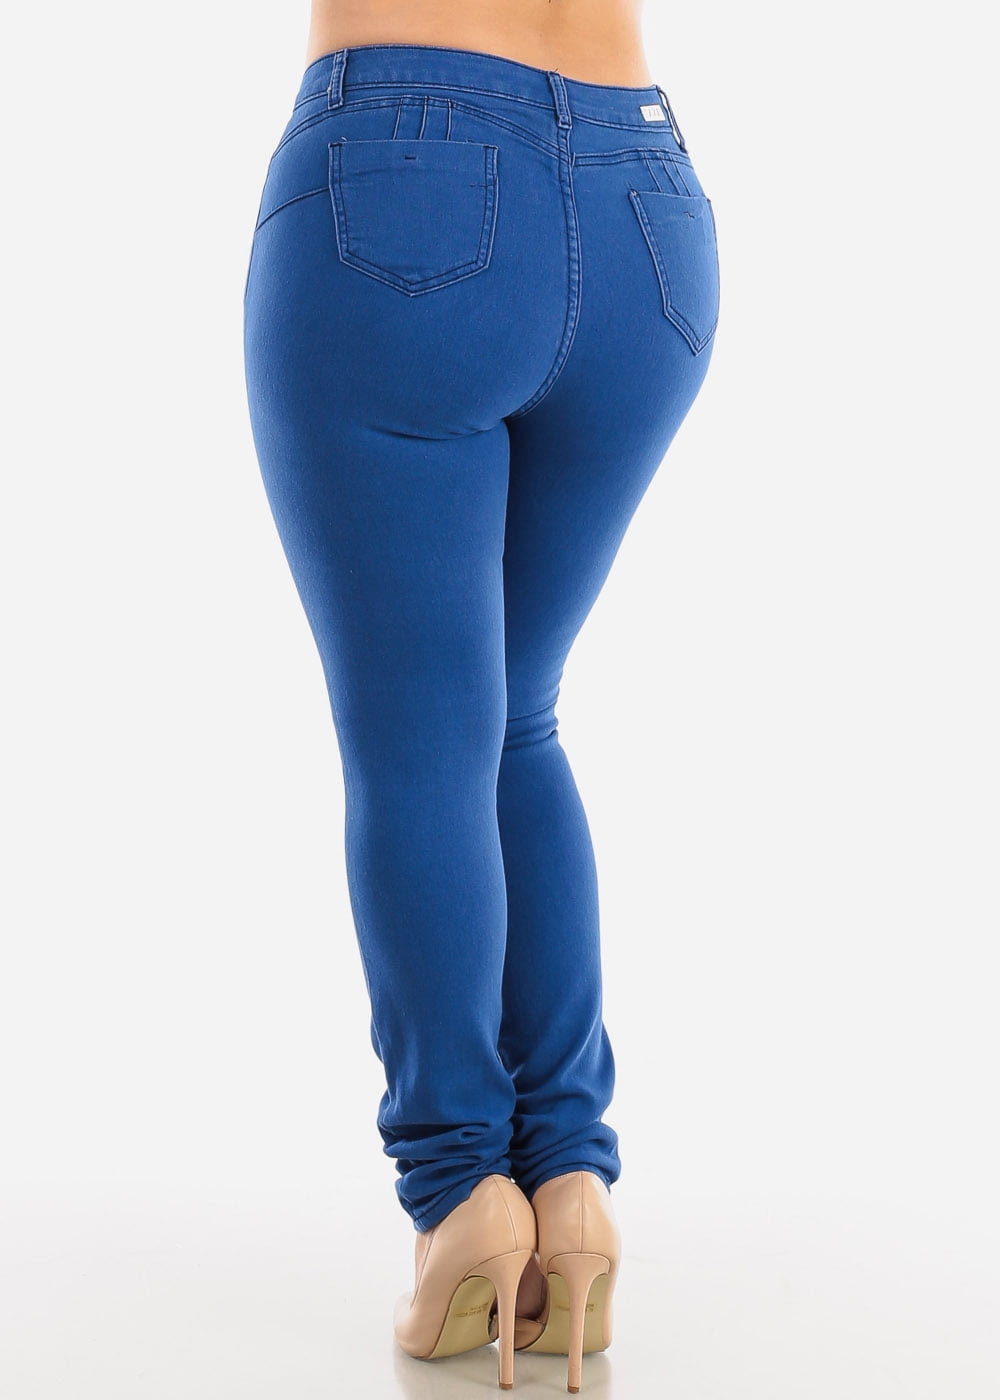 Moda Xpress - Plus Size Butt Lifting Blue Skinny Jeans 10931K - Walmart ...